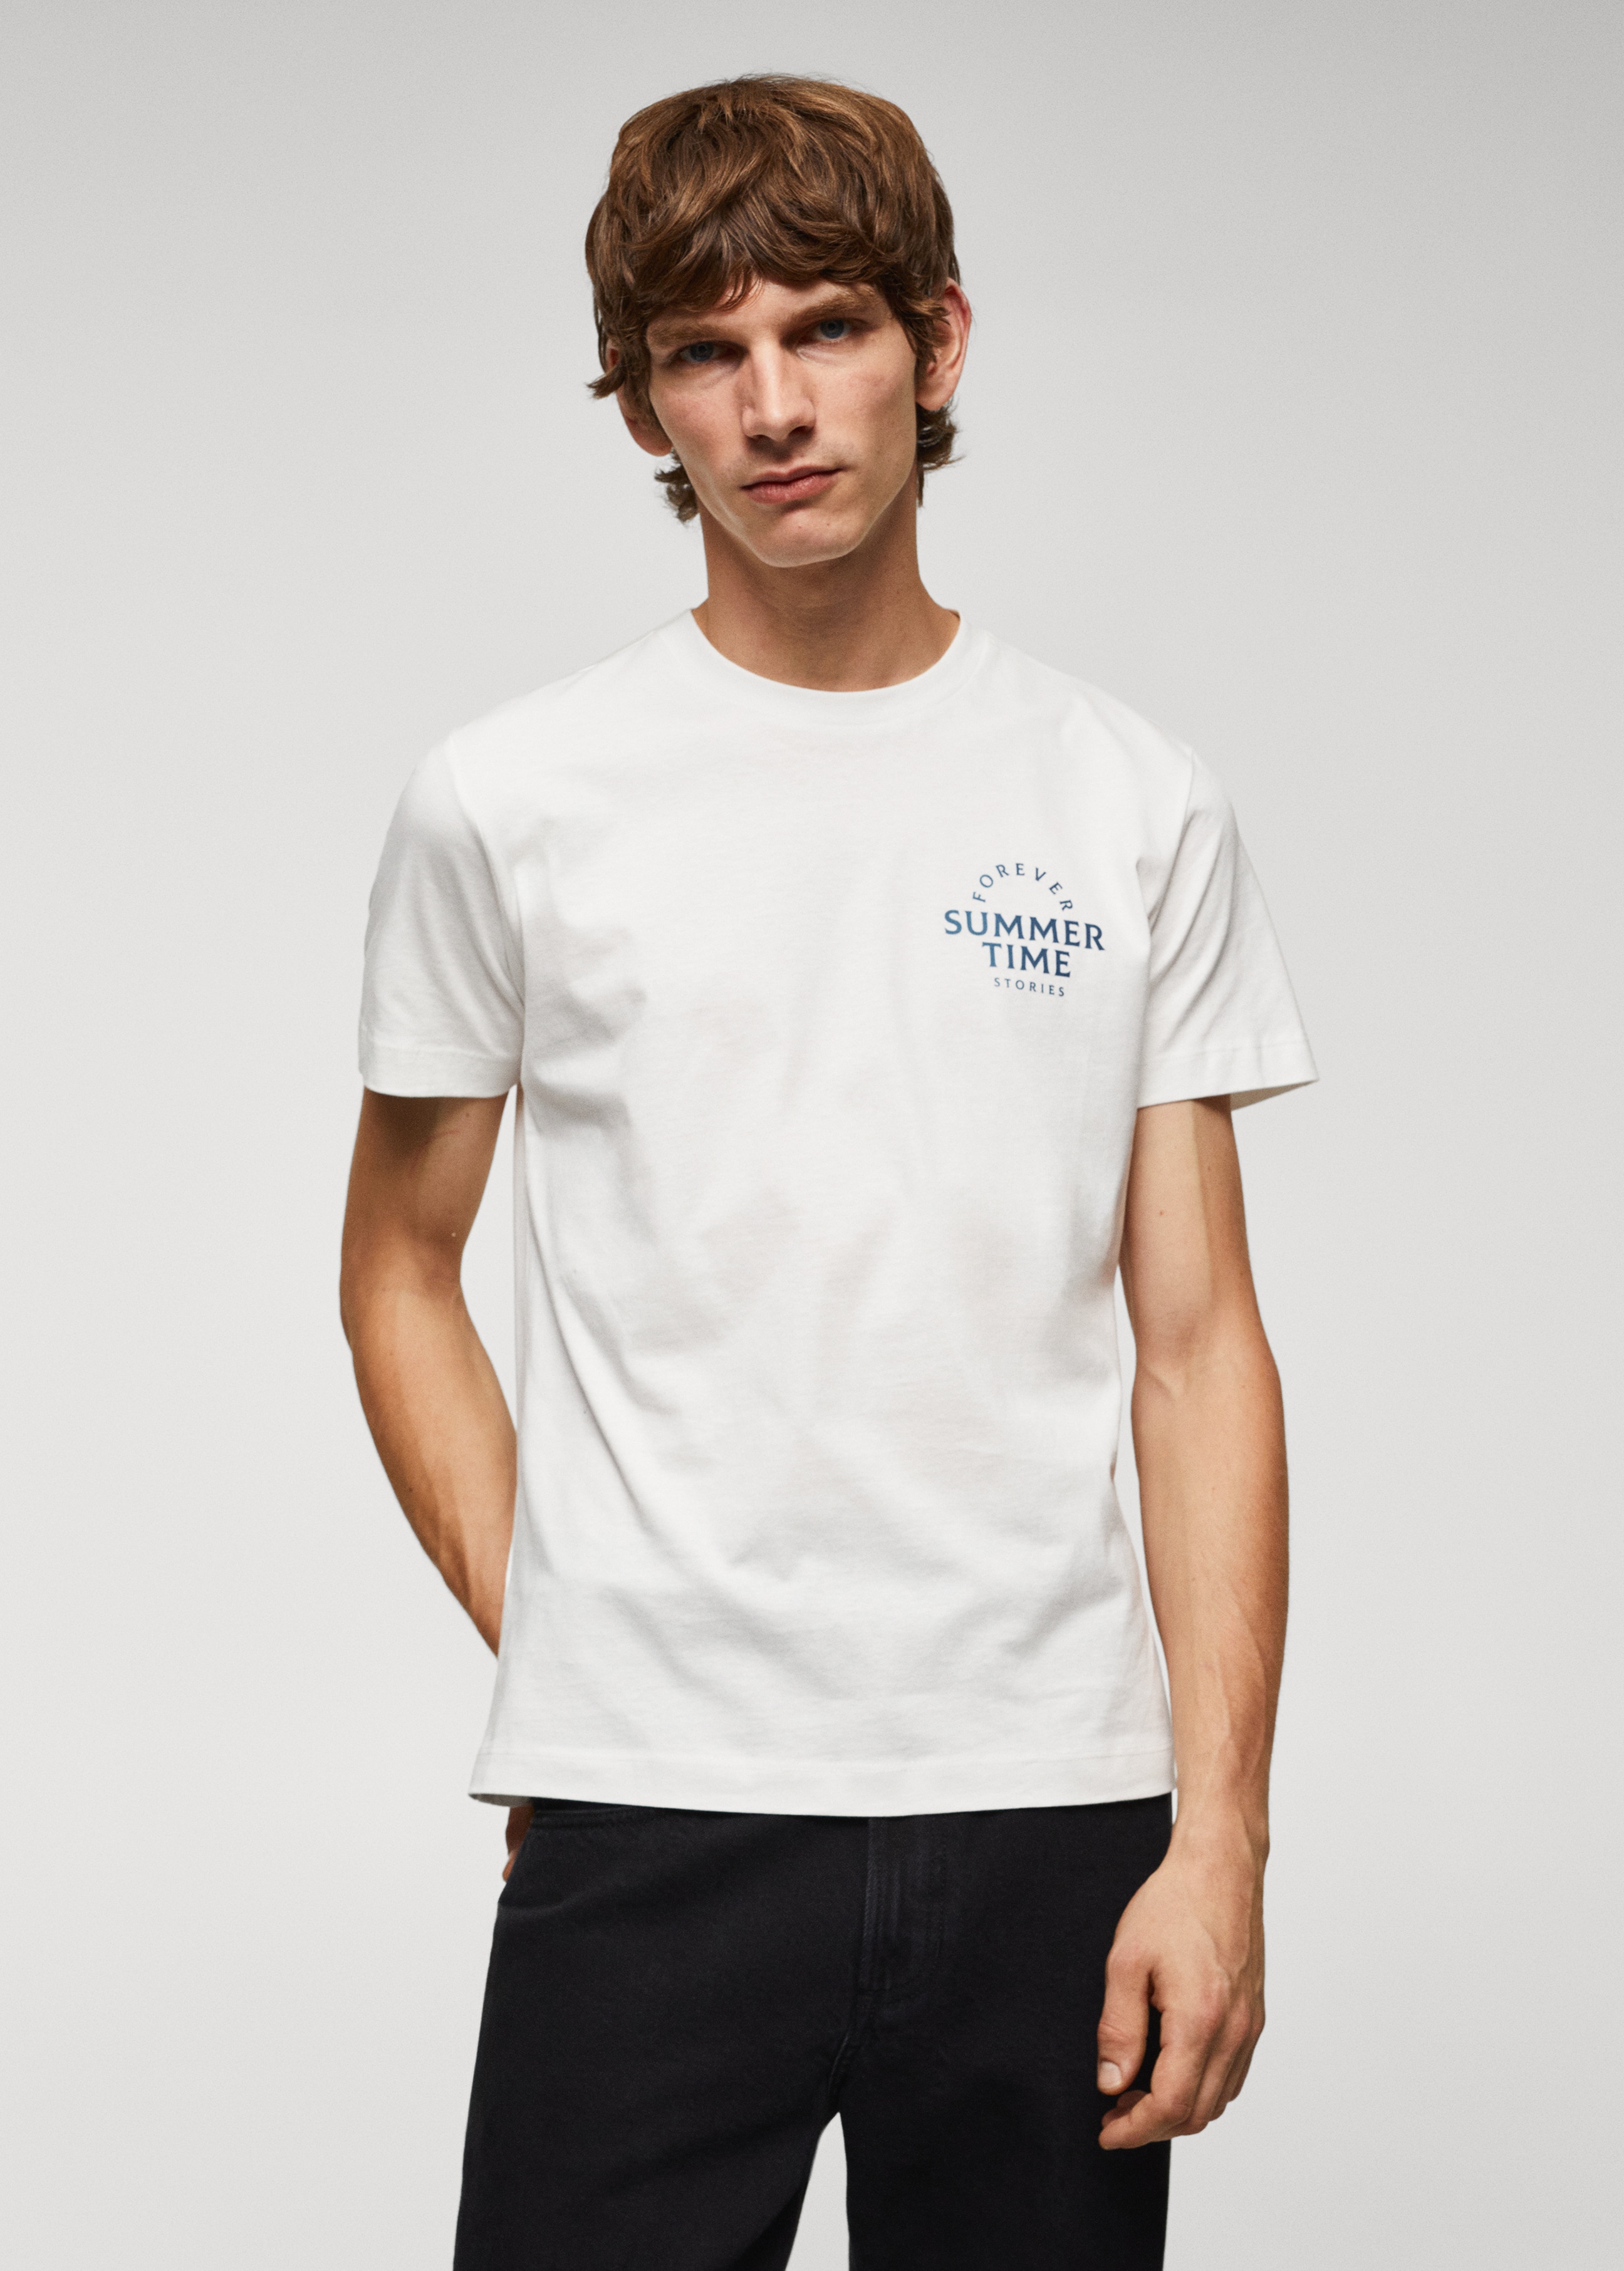 100% cotton printed t-shirt - Medium plane